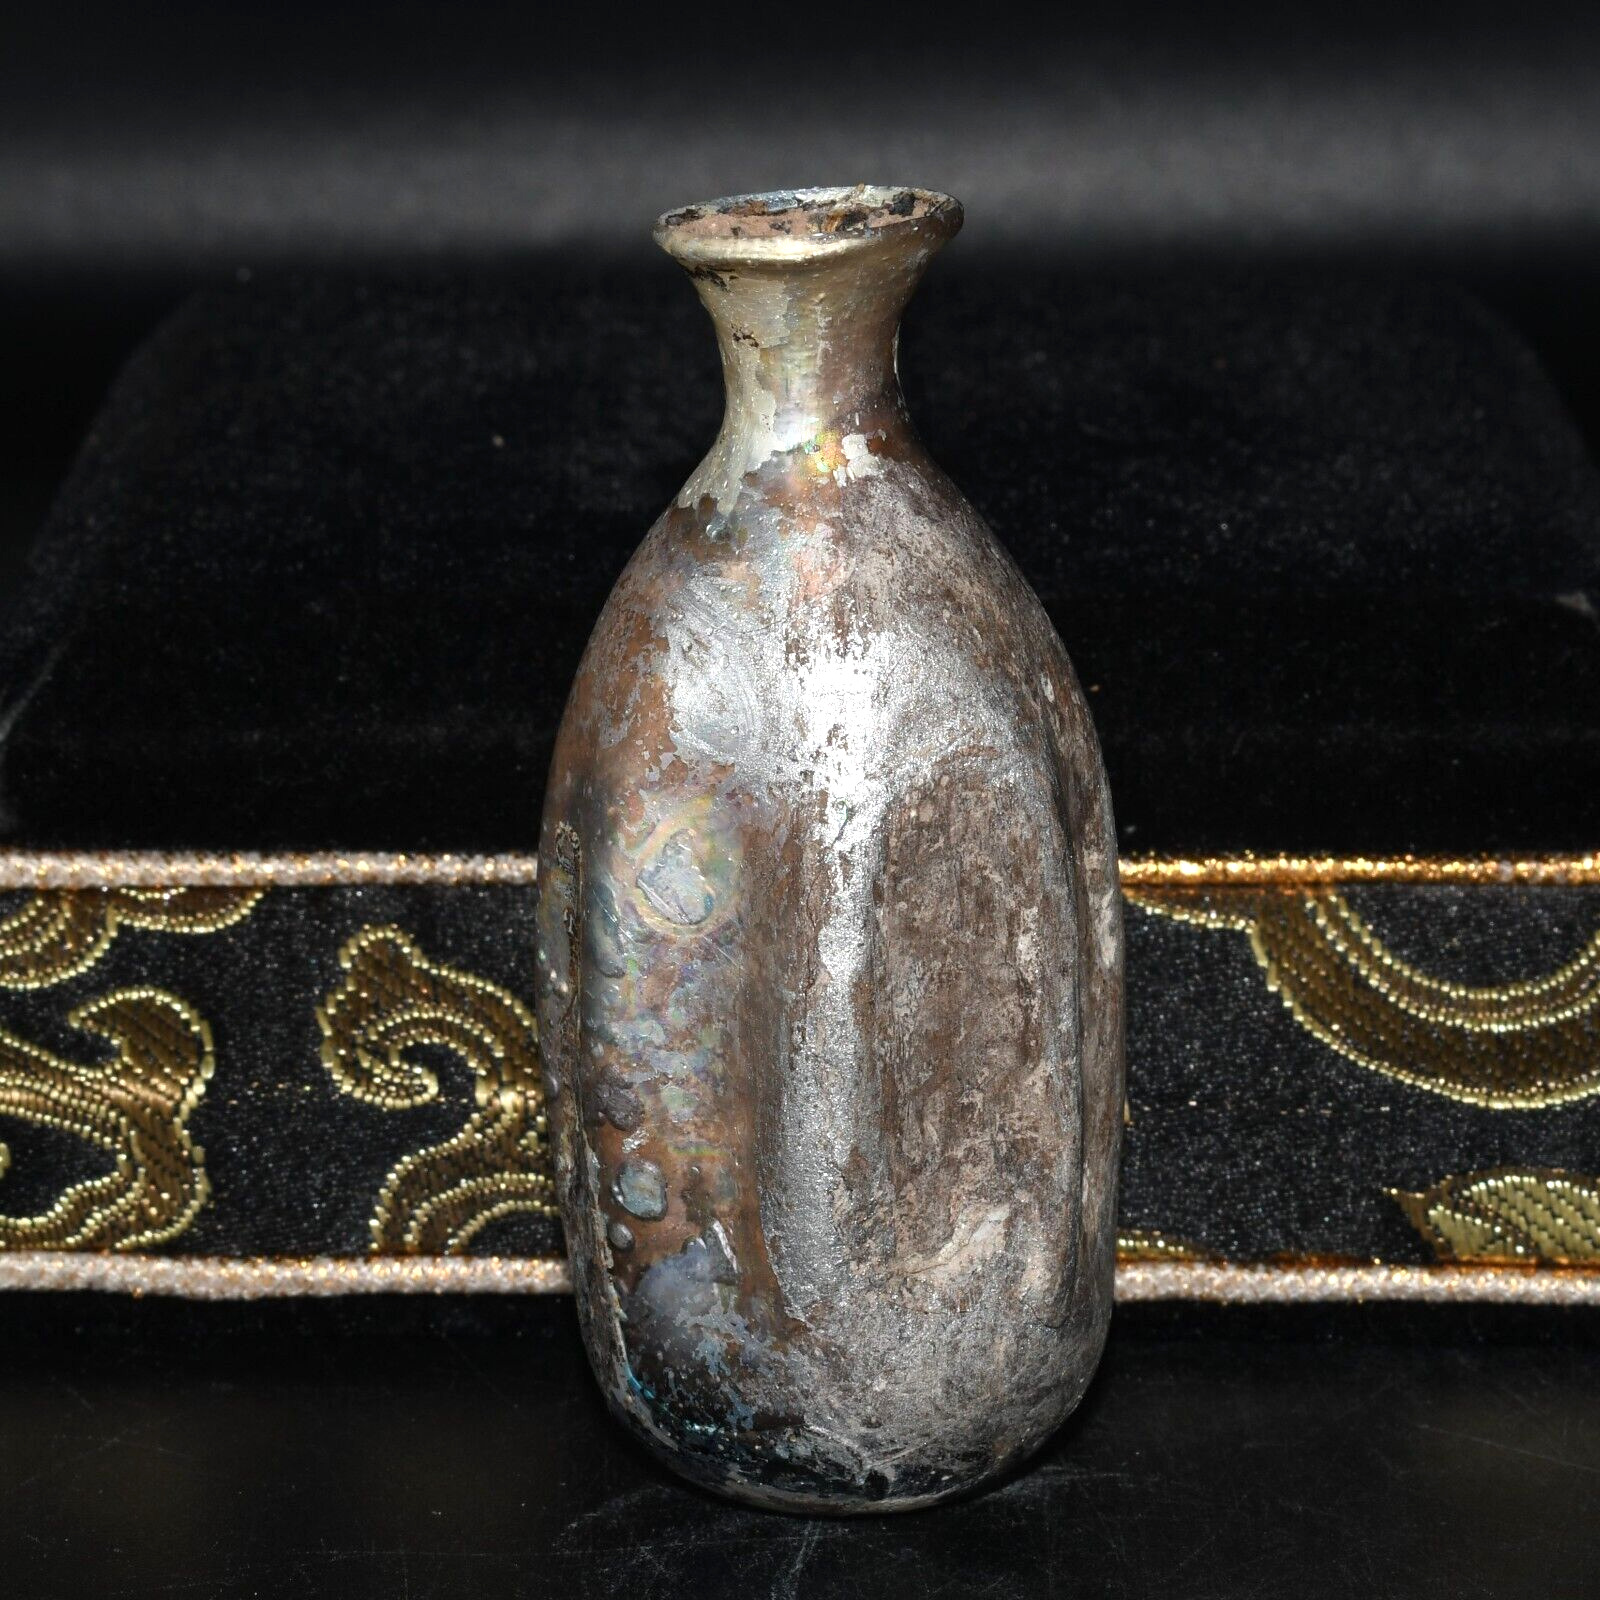 Intact Ancient Roman Glass Bottle vial with Iridescent Patina Circa 1st Century